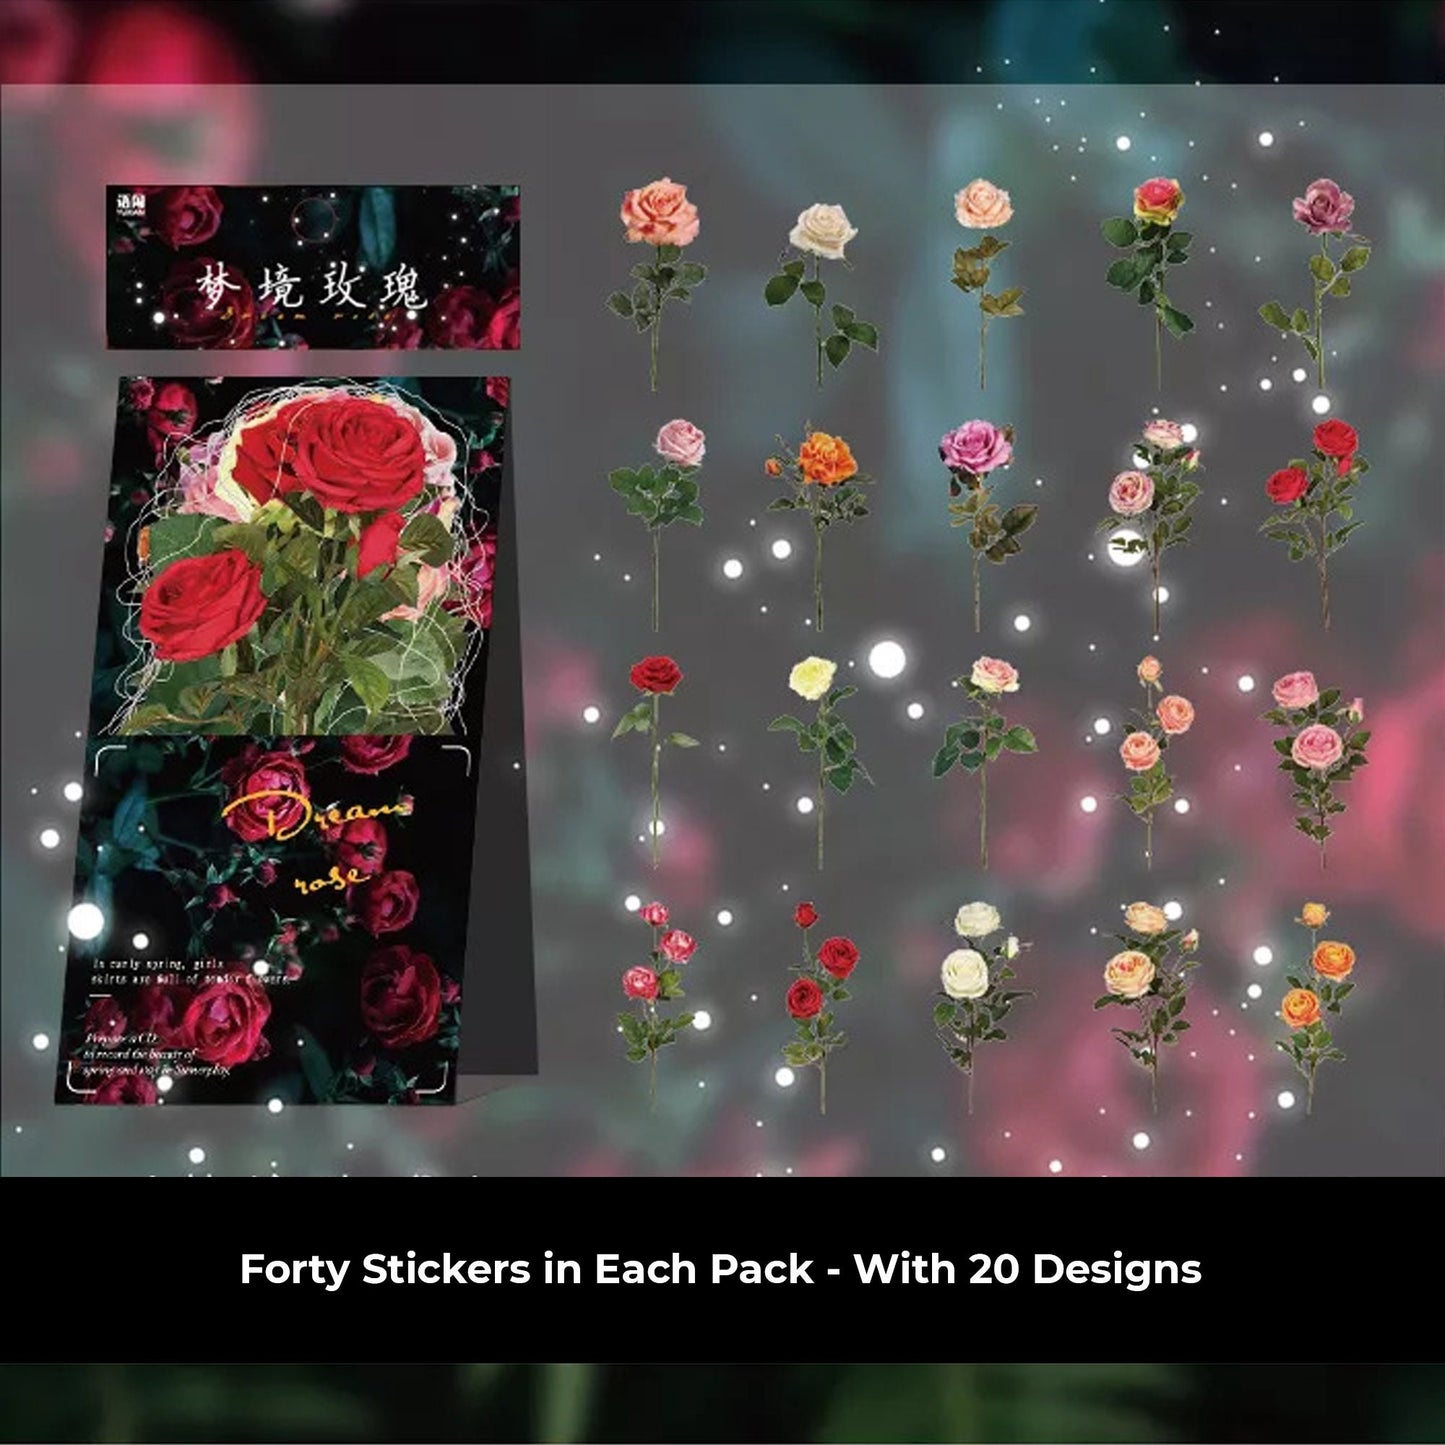 Cute Stickers, Clear Flower Stickers, Dried Flowers, Mushroom Stickers, Flower Photo Stickers, Journal & Planner Sticker Sticker Packs B2C